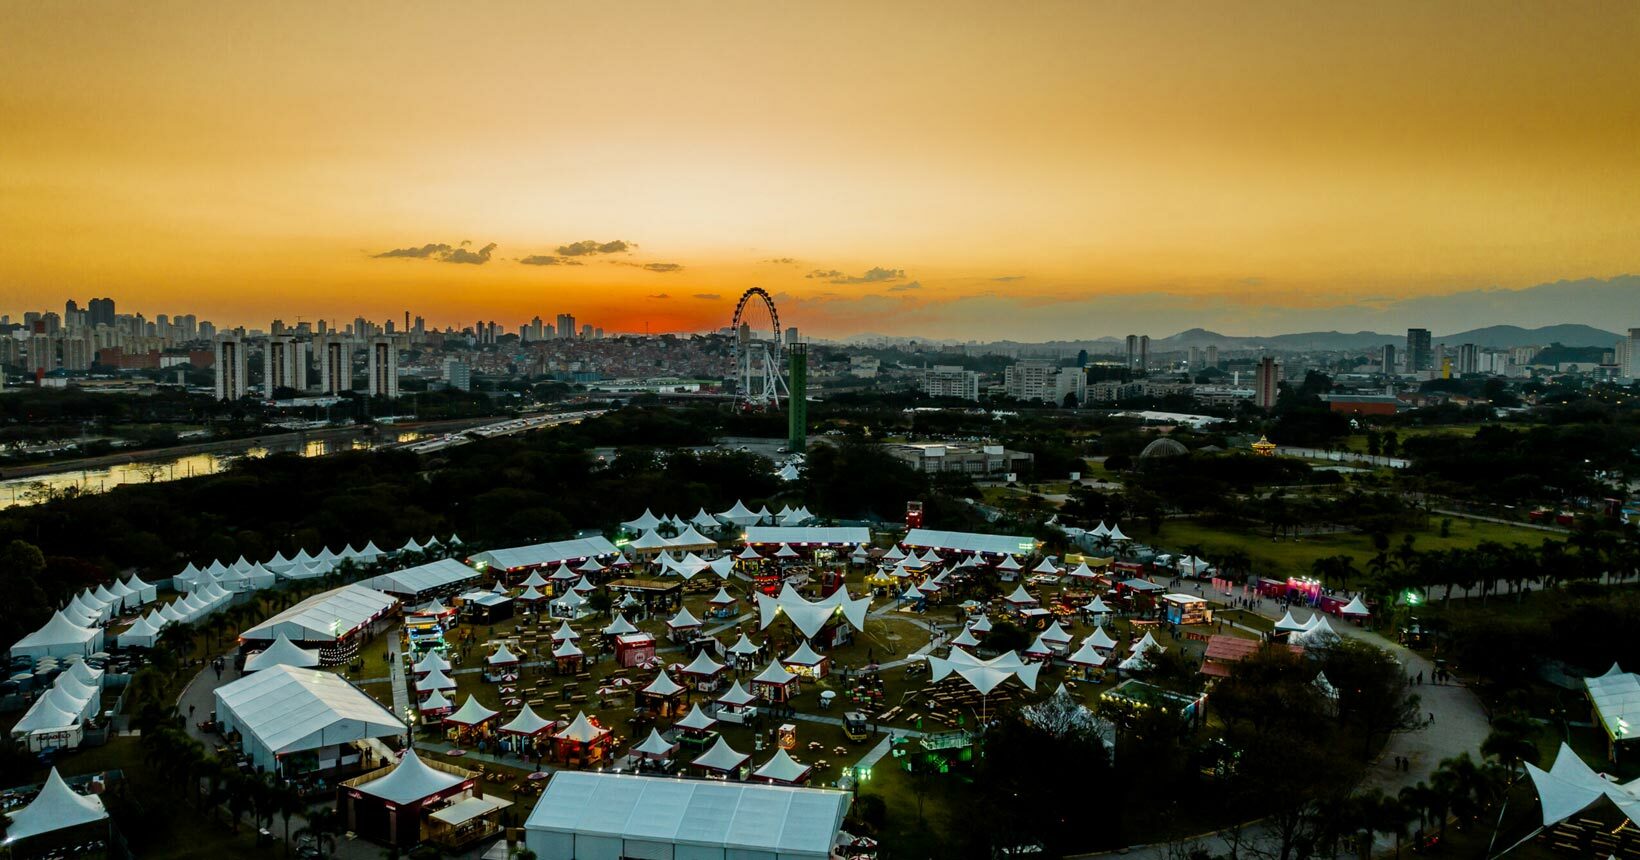 The biggest gastronomic festival in the world starts tomorrow in São Paulo